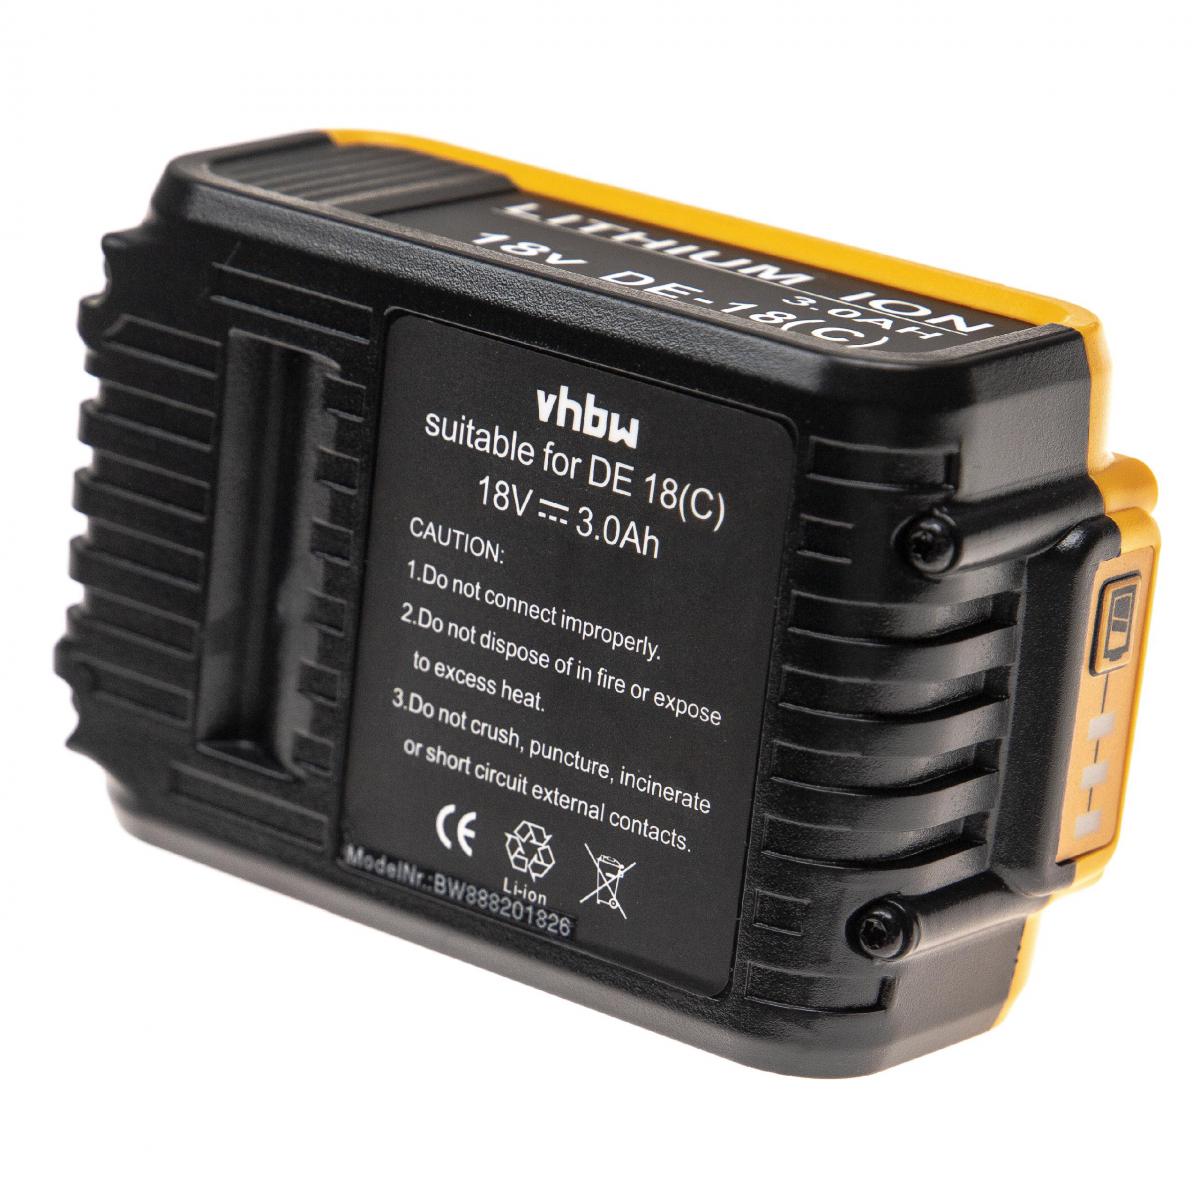 Vhbw - vhbw Batterie compatible avec Dewalt DCS380B, DCS380L1, DCS380M1, DCS381, DCS391, DCS391B, DCS391L1 outil électrique (3000mAh Li-Ion 18V) - Clouterie